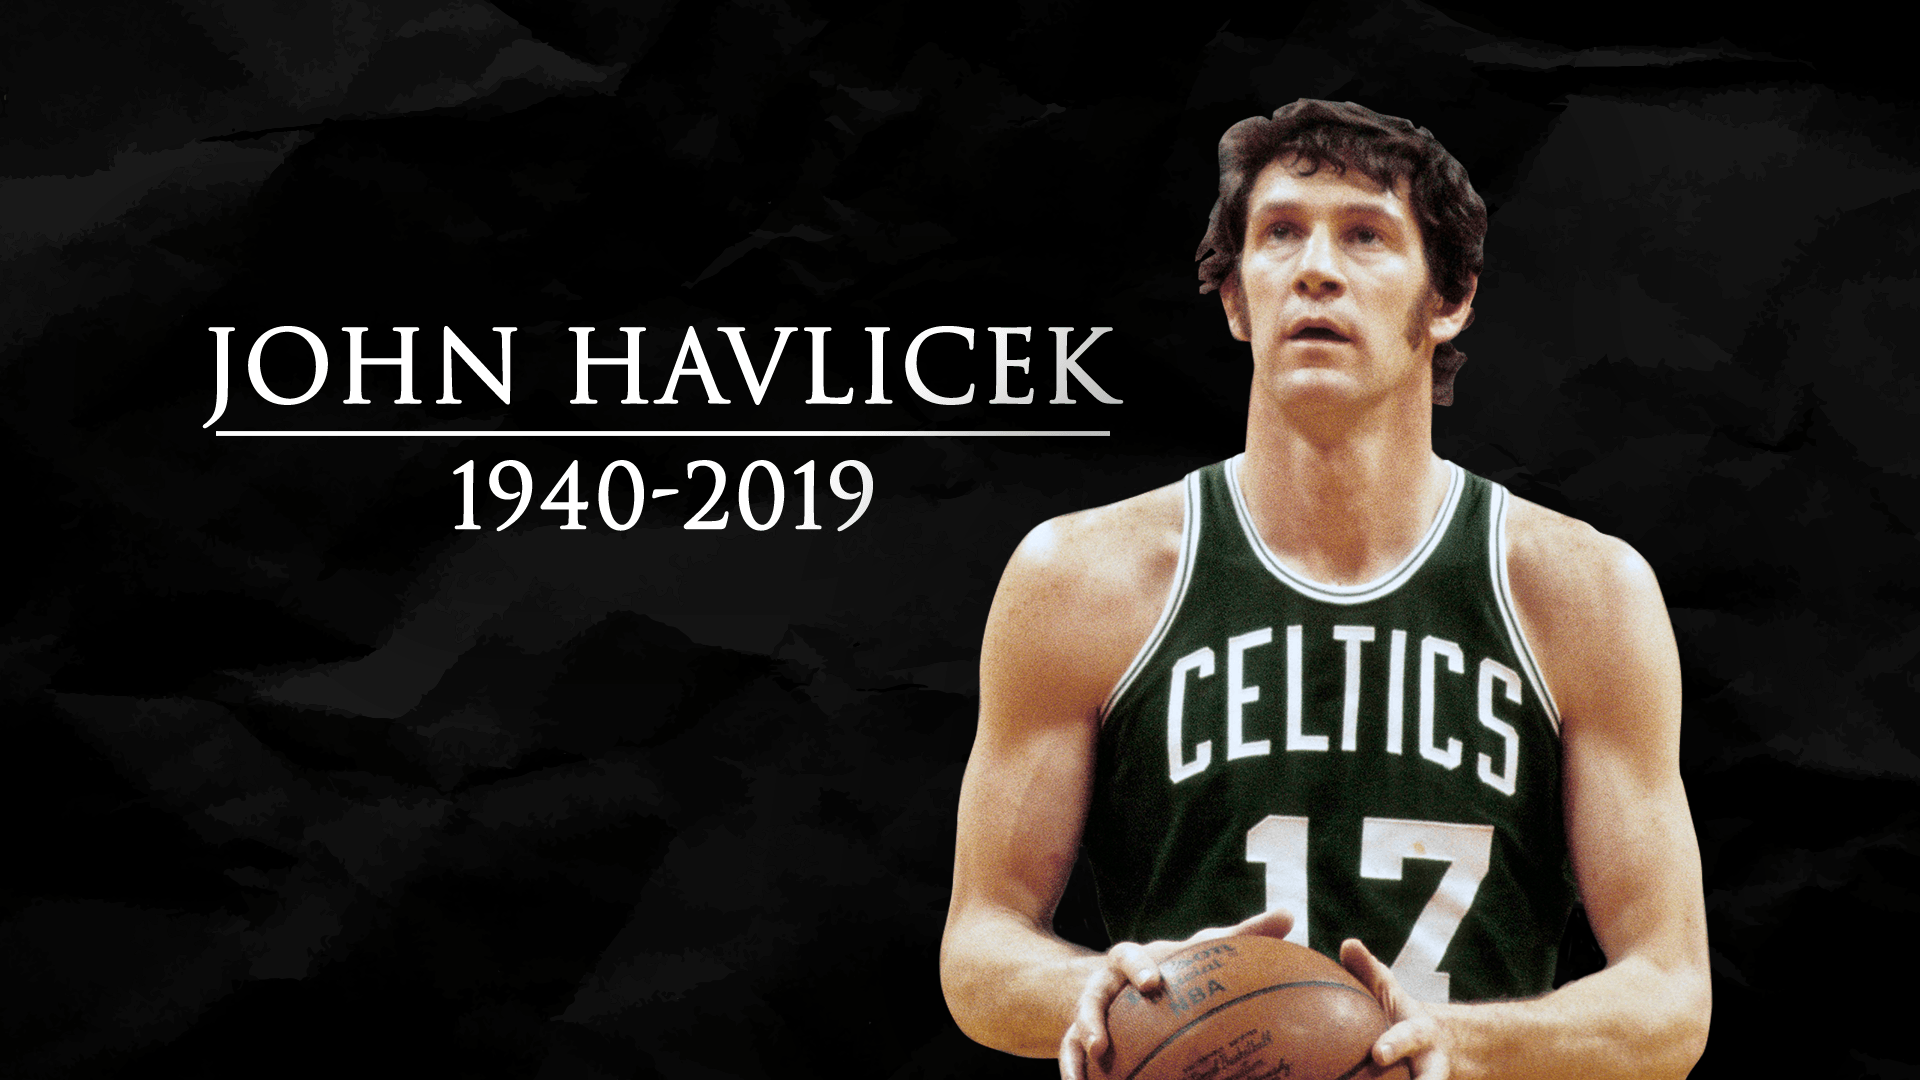 Celtics legend John Havlicek, a mainstay of '60s and '70s champions